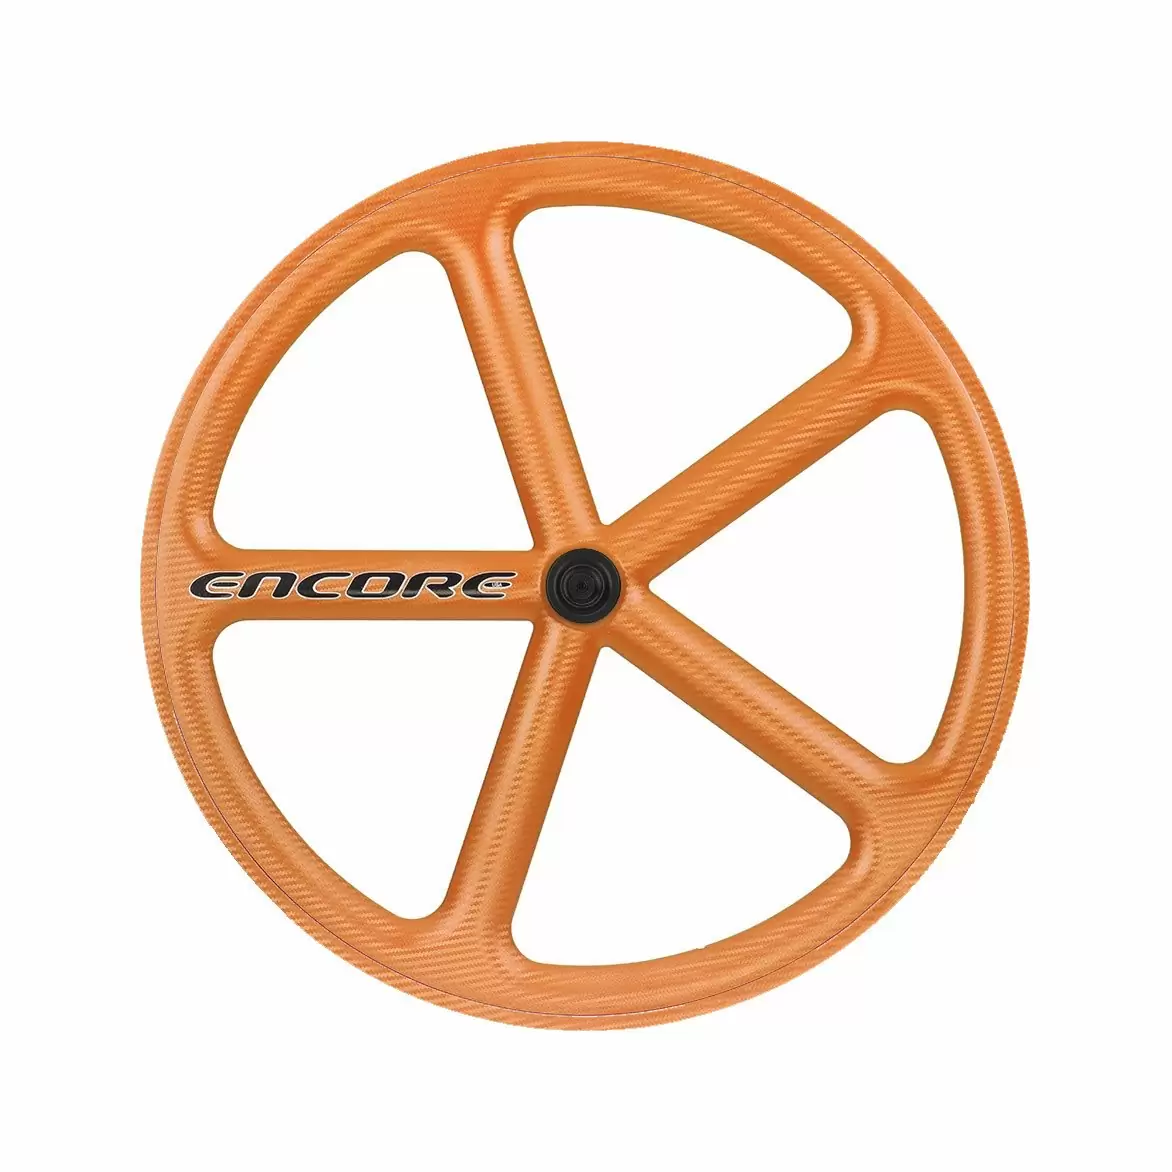 roda dianteira 700c track 5 raios fibra de carbono laranja nmsw - image